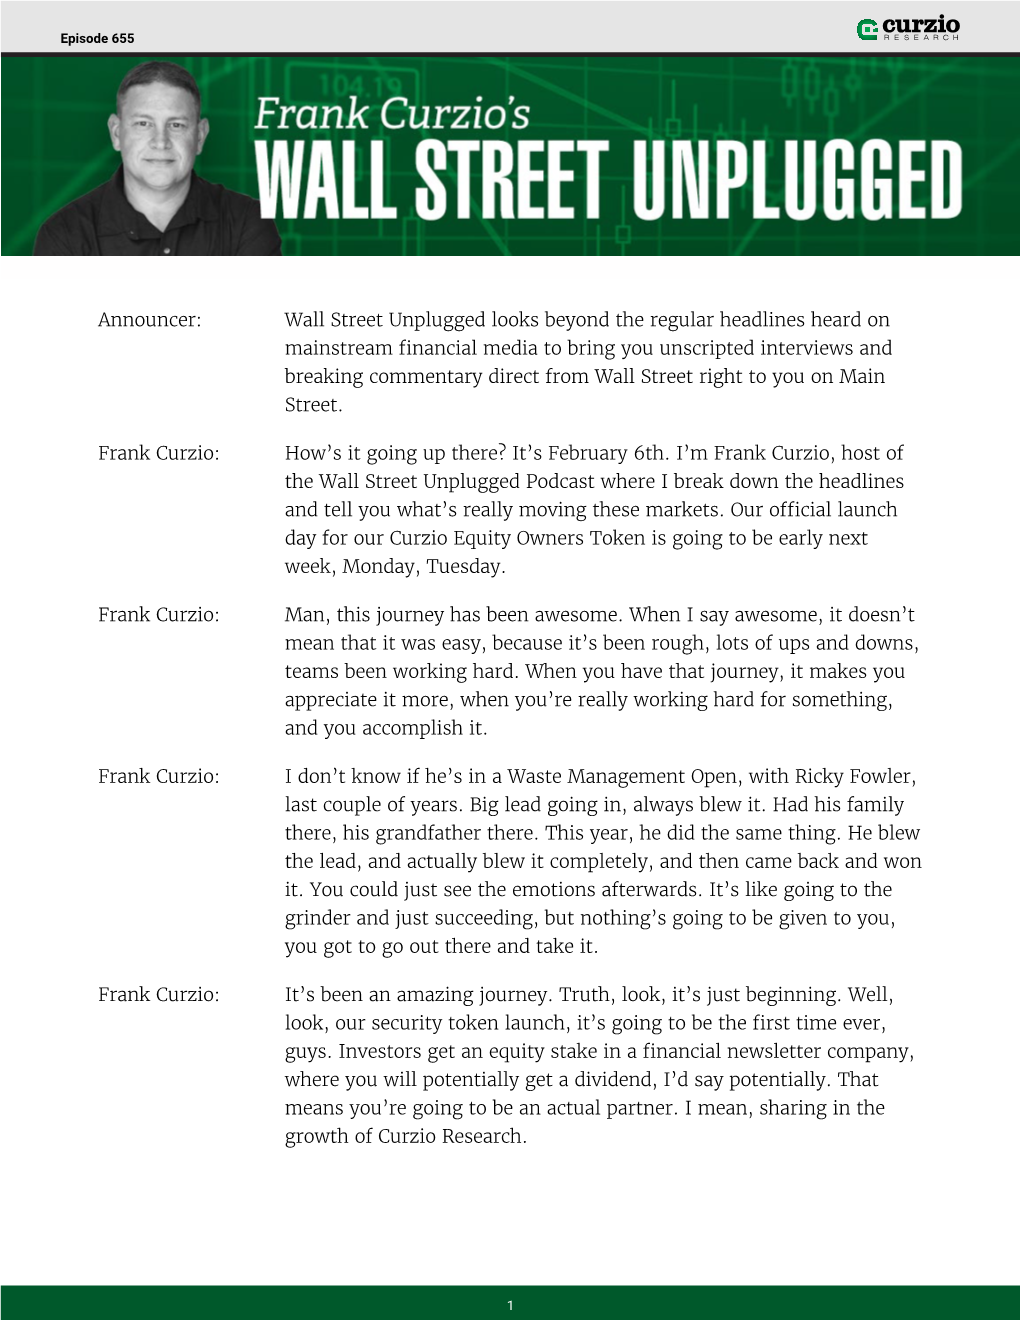 Announcer: Wall Street Unplugged Looks Beyond the Regular Headlines